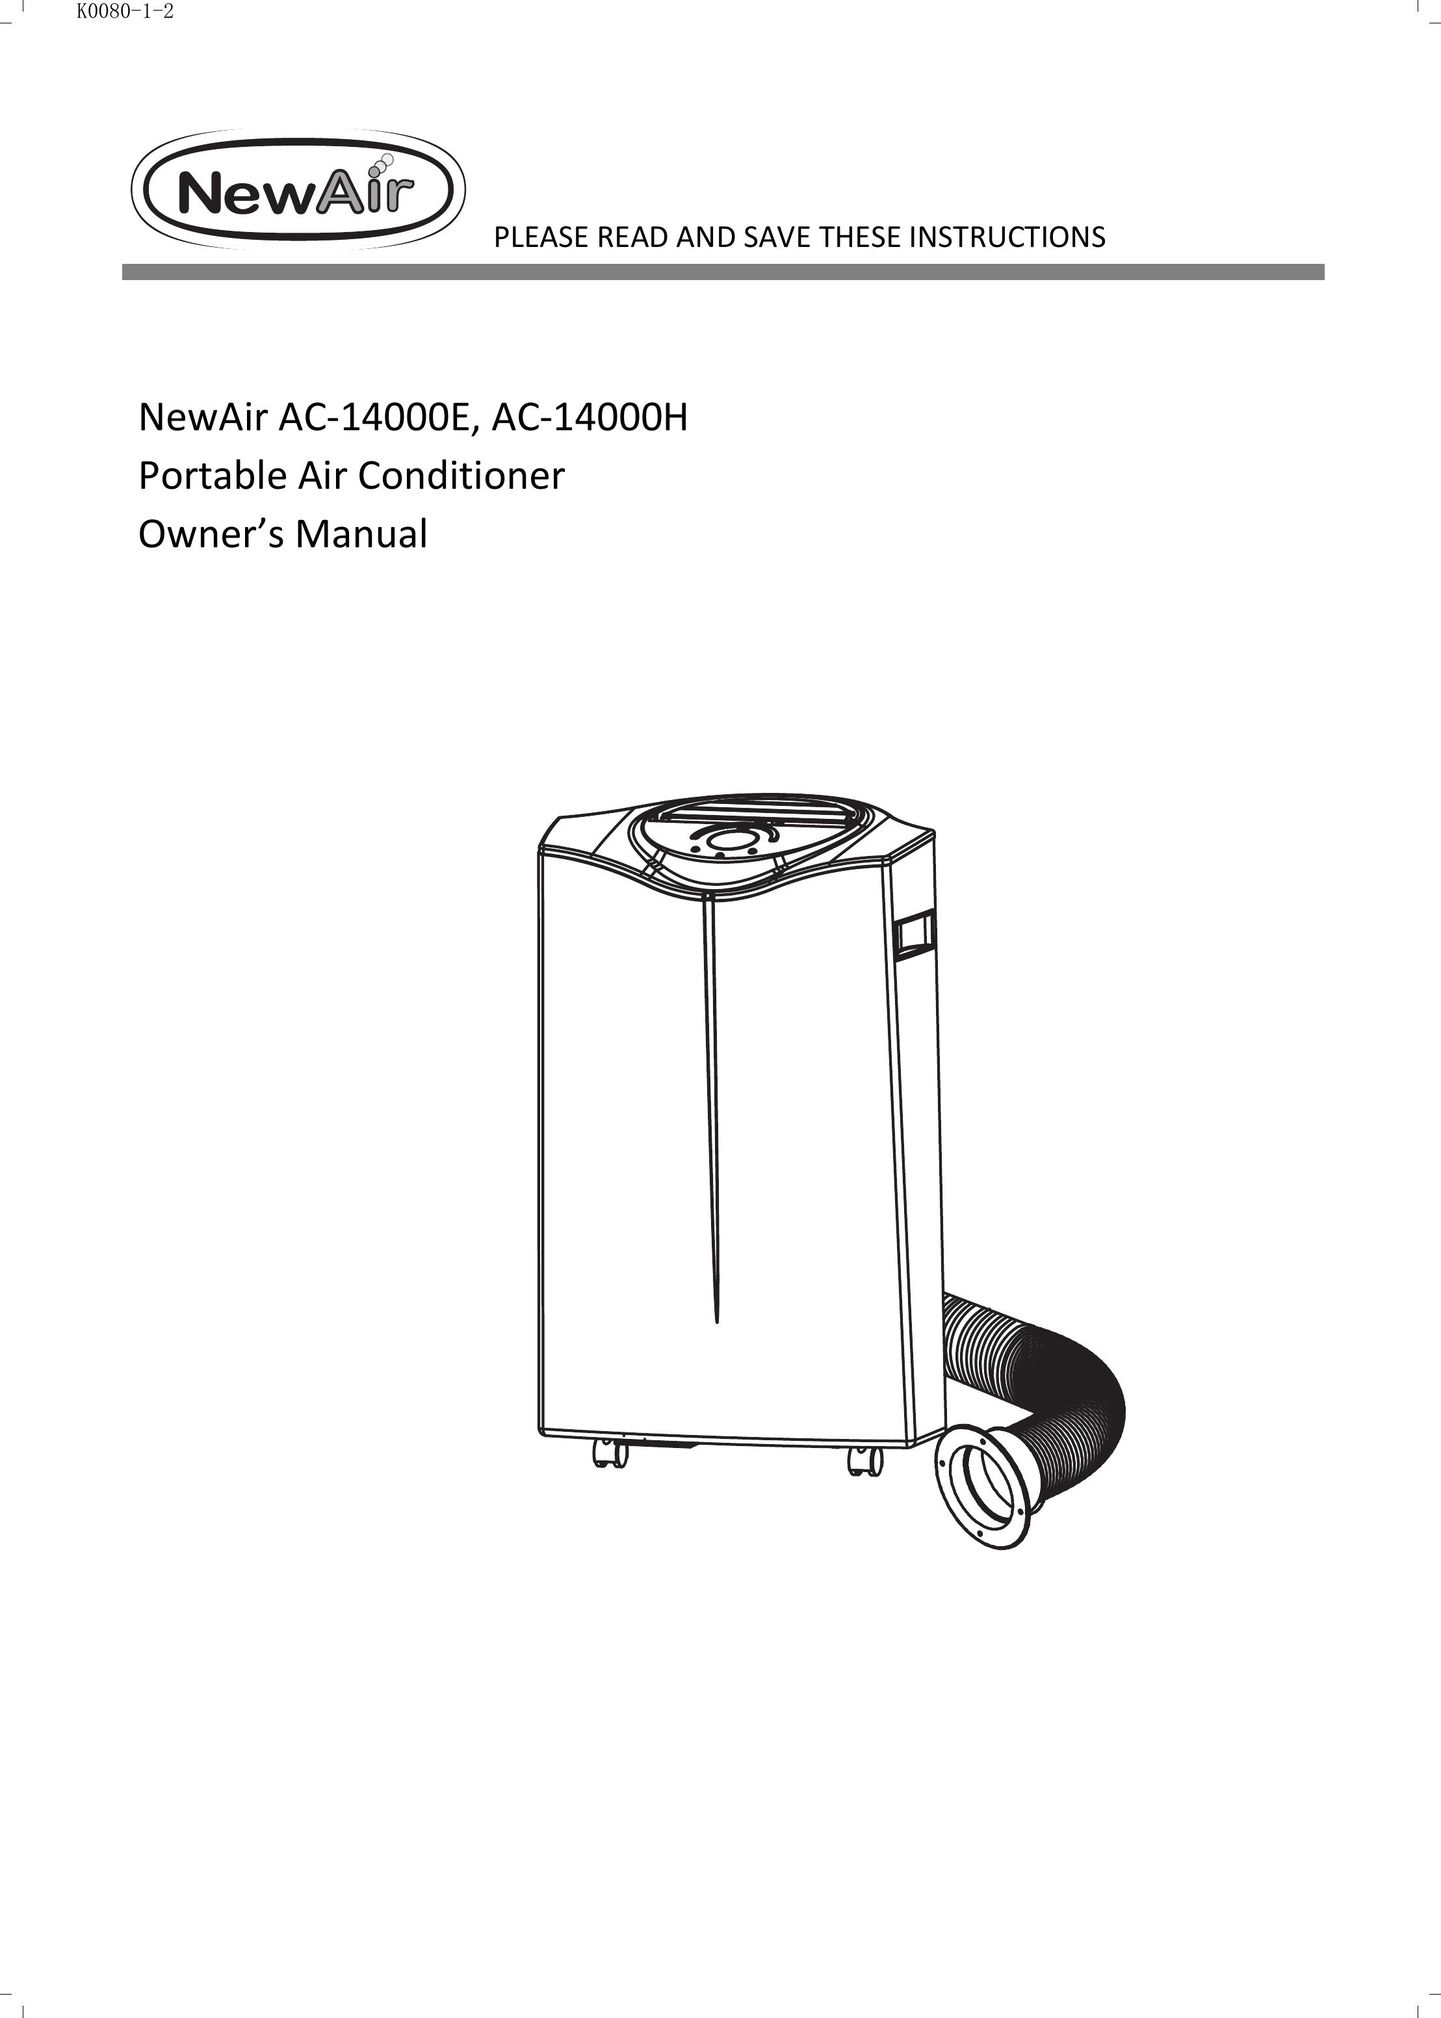 NewAir AC14000H Air Conditioner User Manual